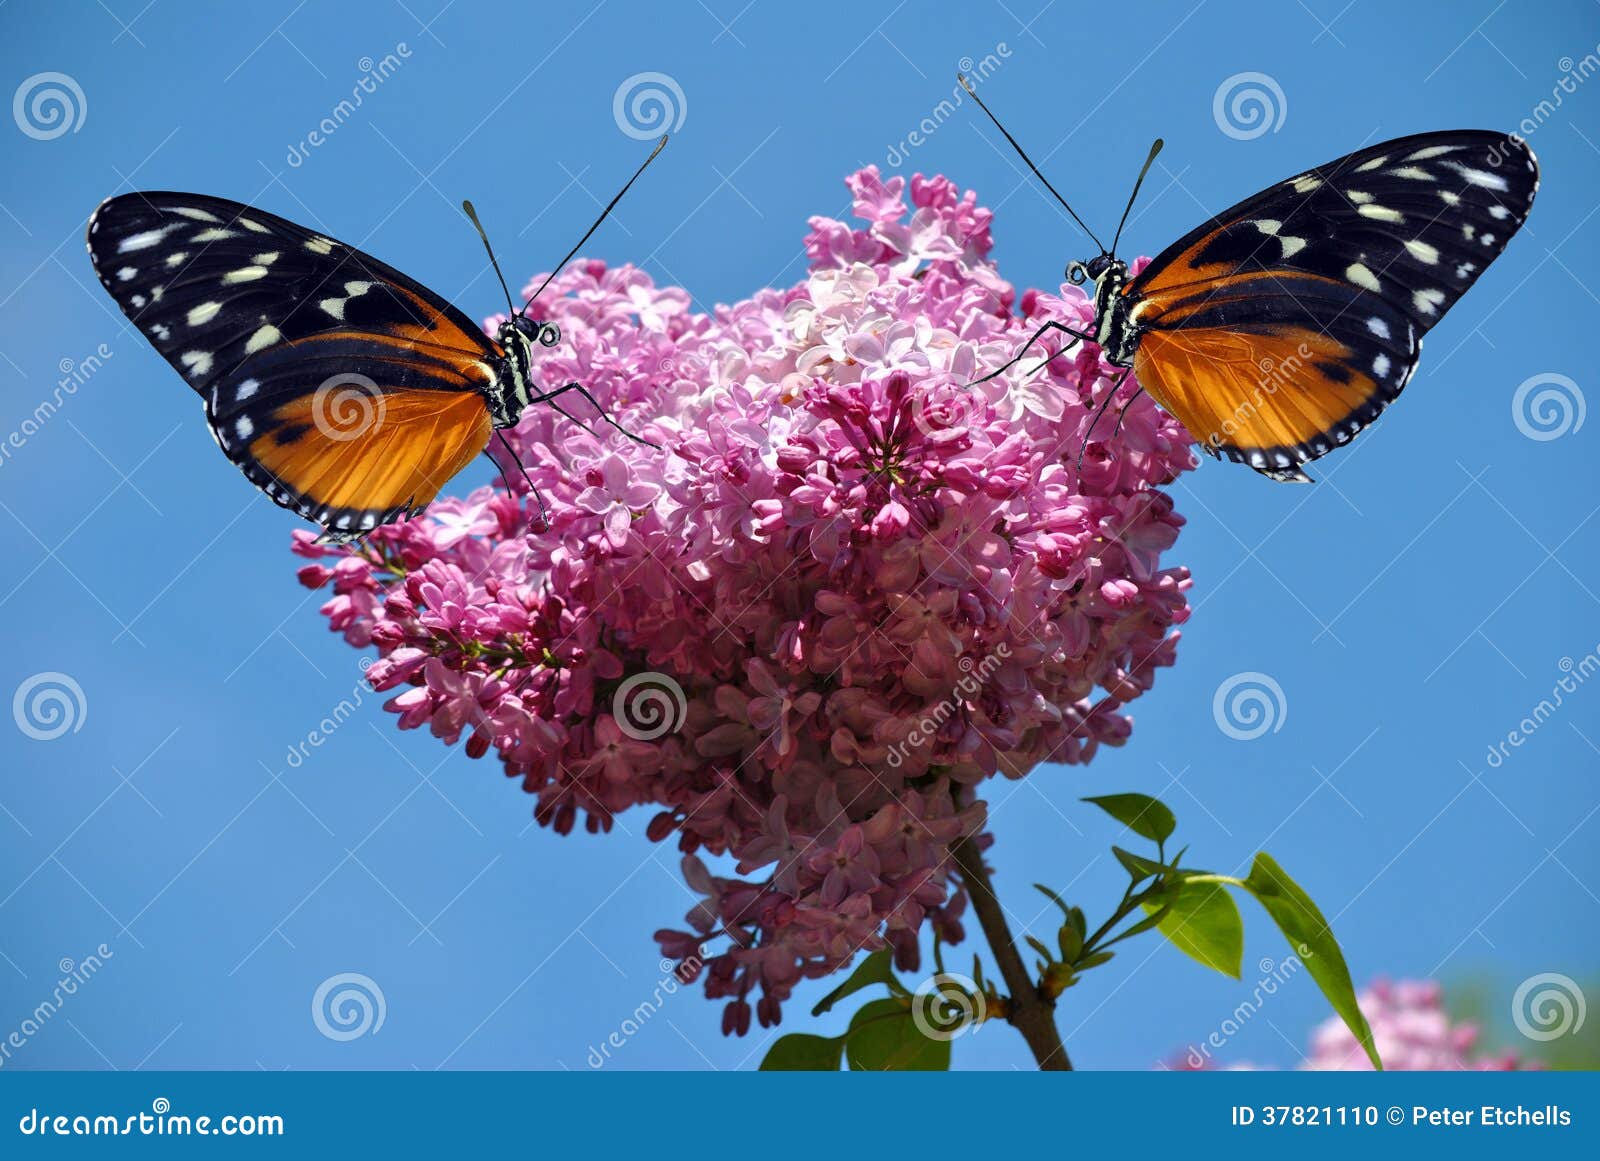 heliconius hecate butterflies